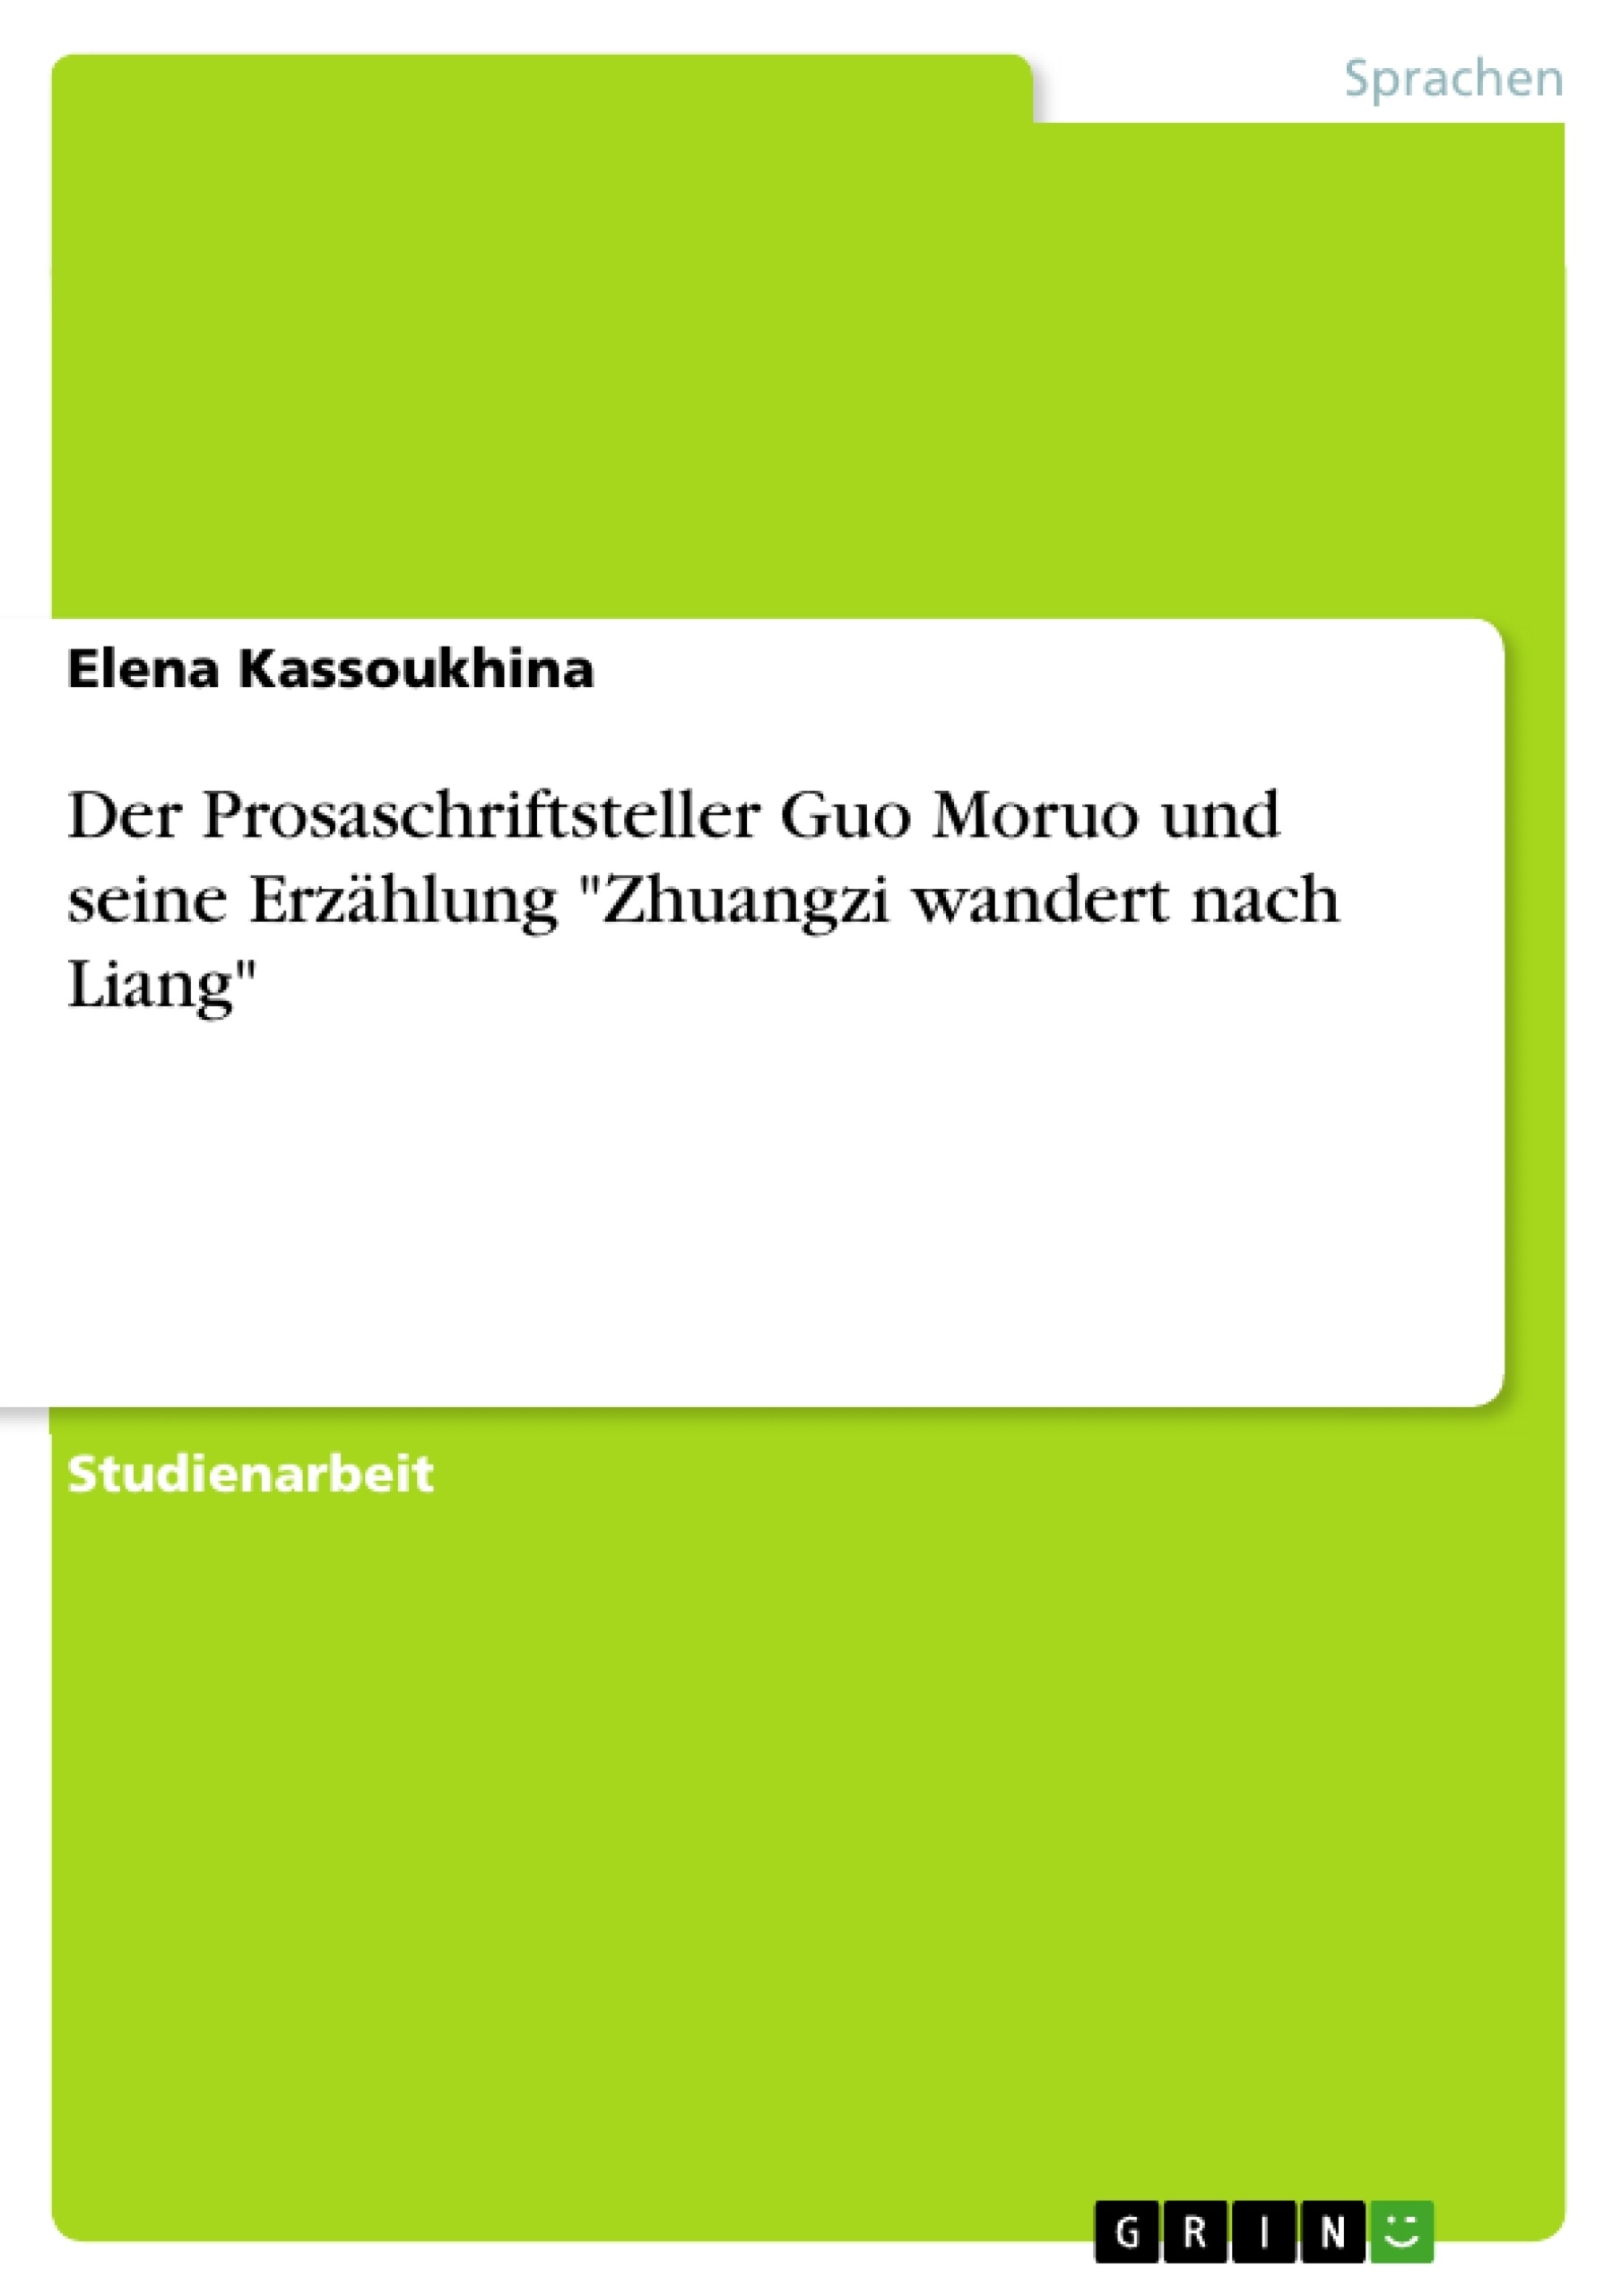 Title: Der Prosaschriftsteller Guo Moruo und seine Erzählung "Zhuangzi wandert nach Liang"